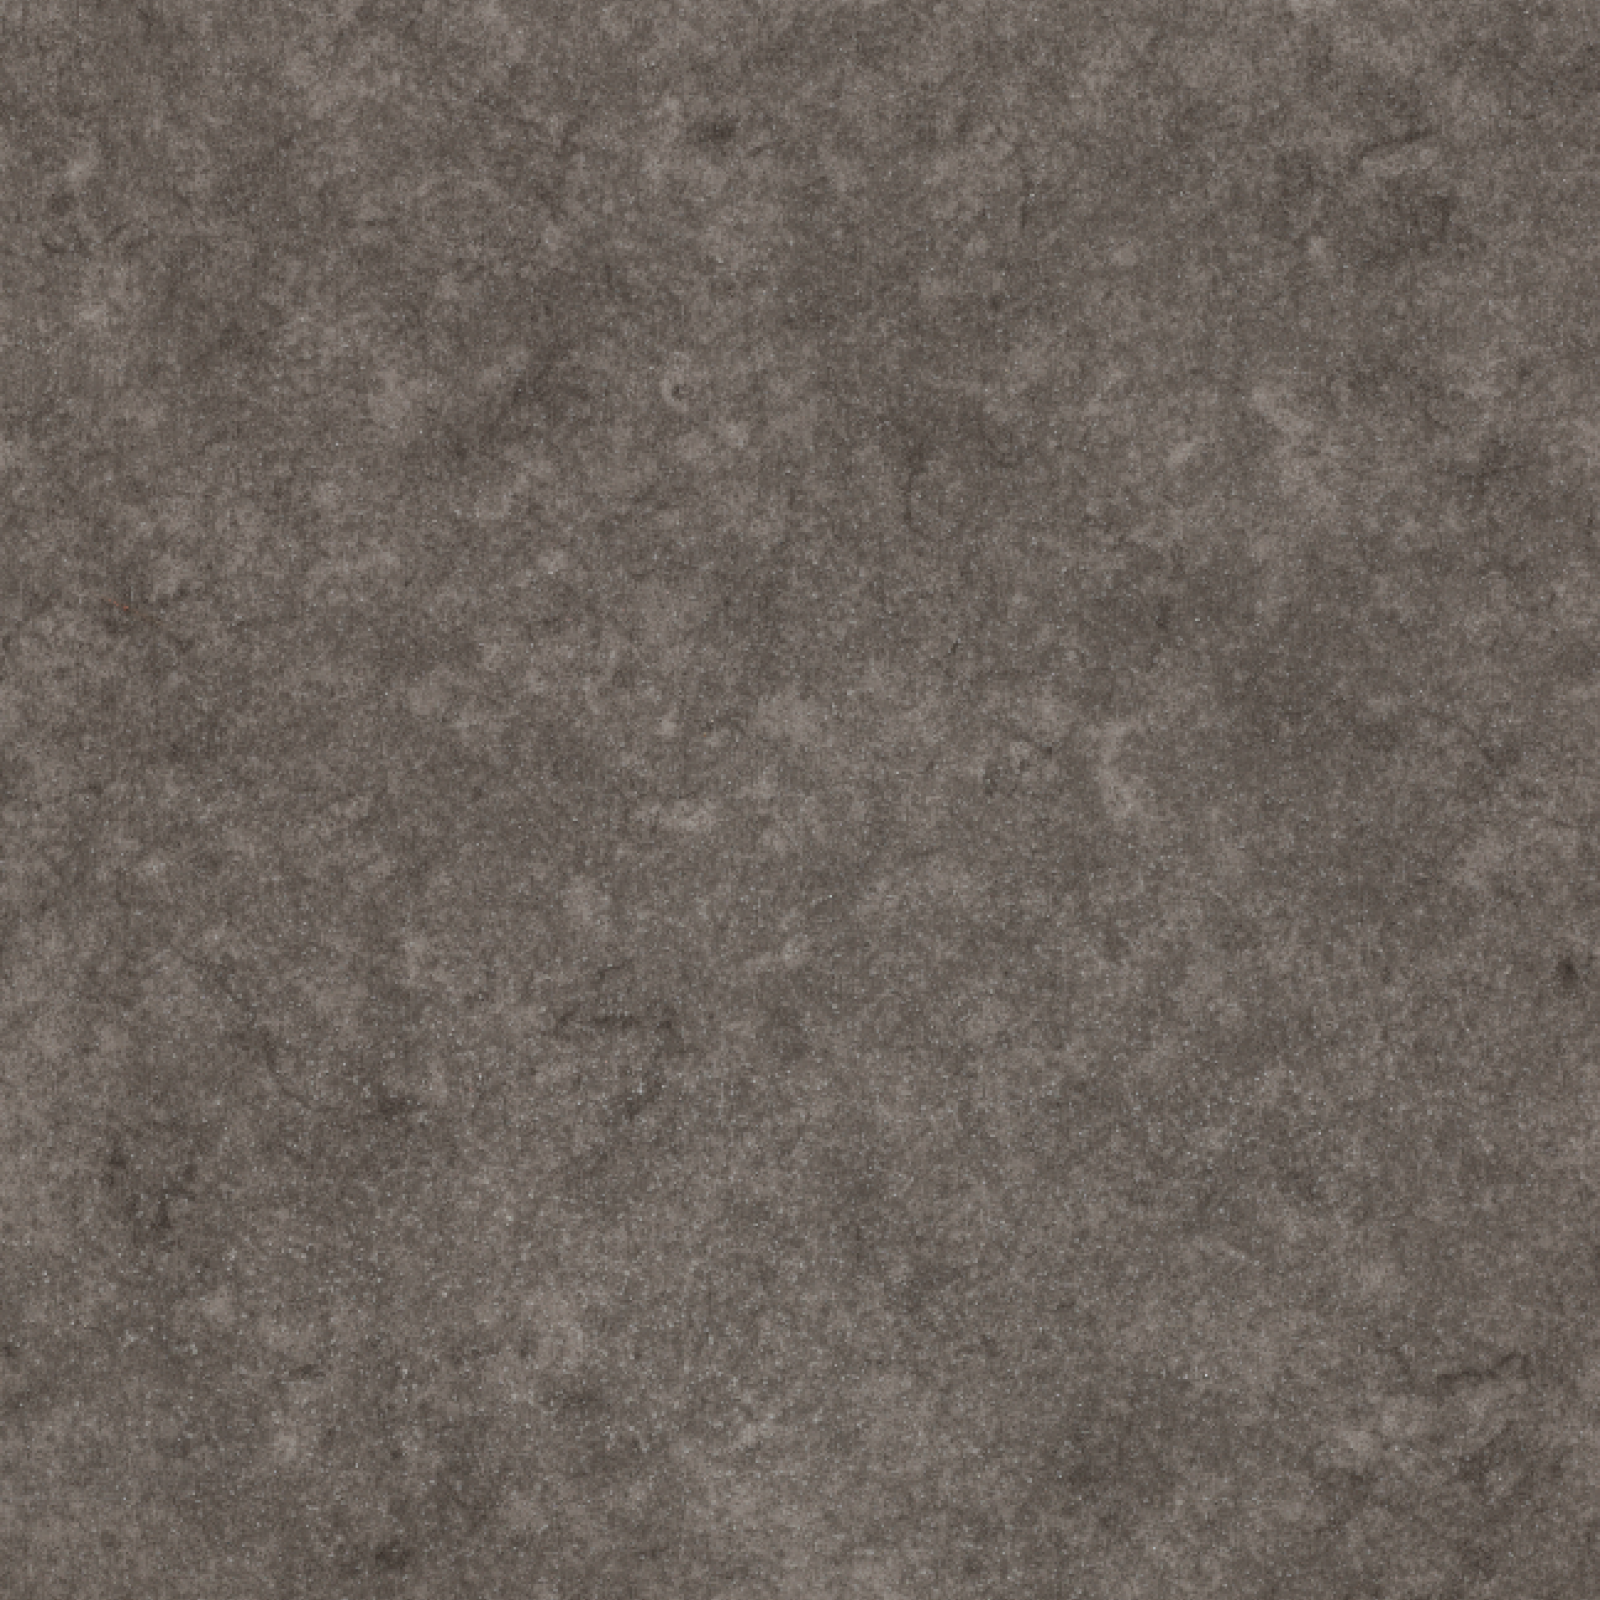 Vzor - 17162 grey concrete